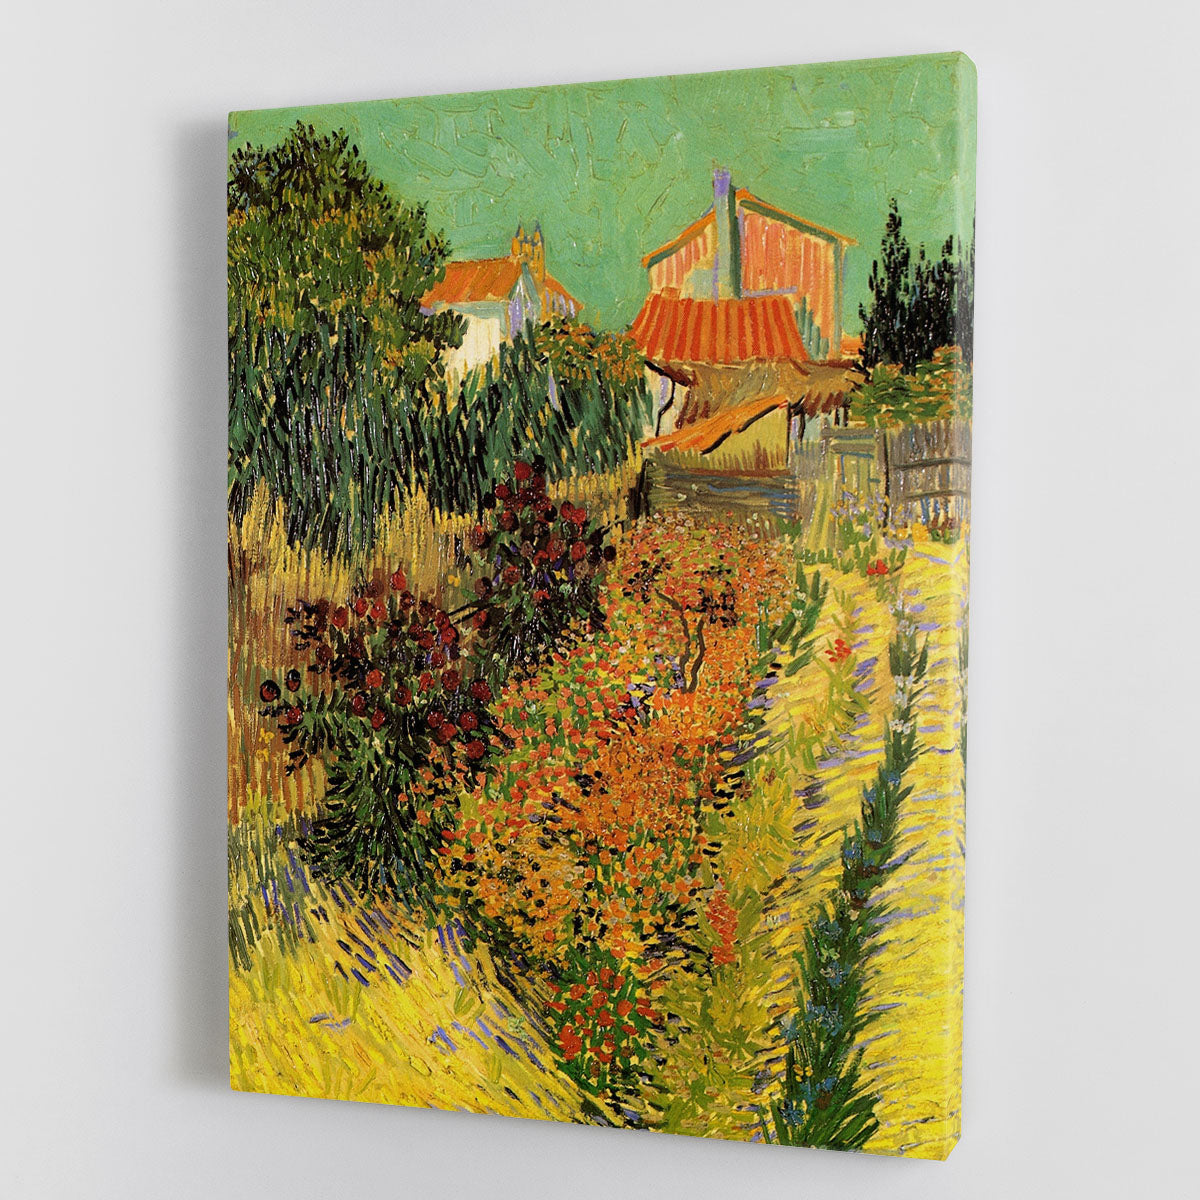 Garden Behind a House by Van Gogh Canvas Print or Poster - Canvas Art Rocks - 1